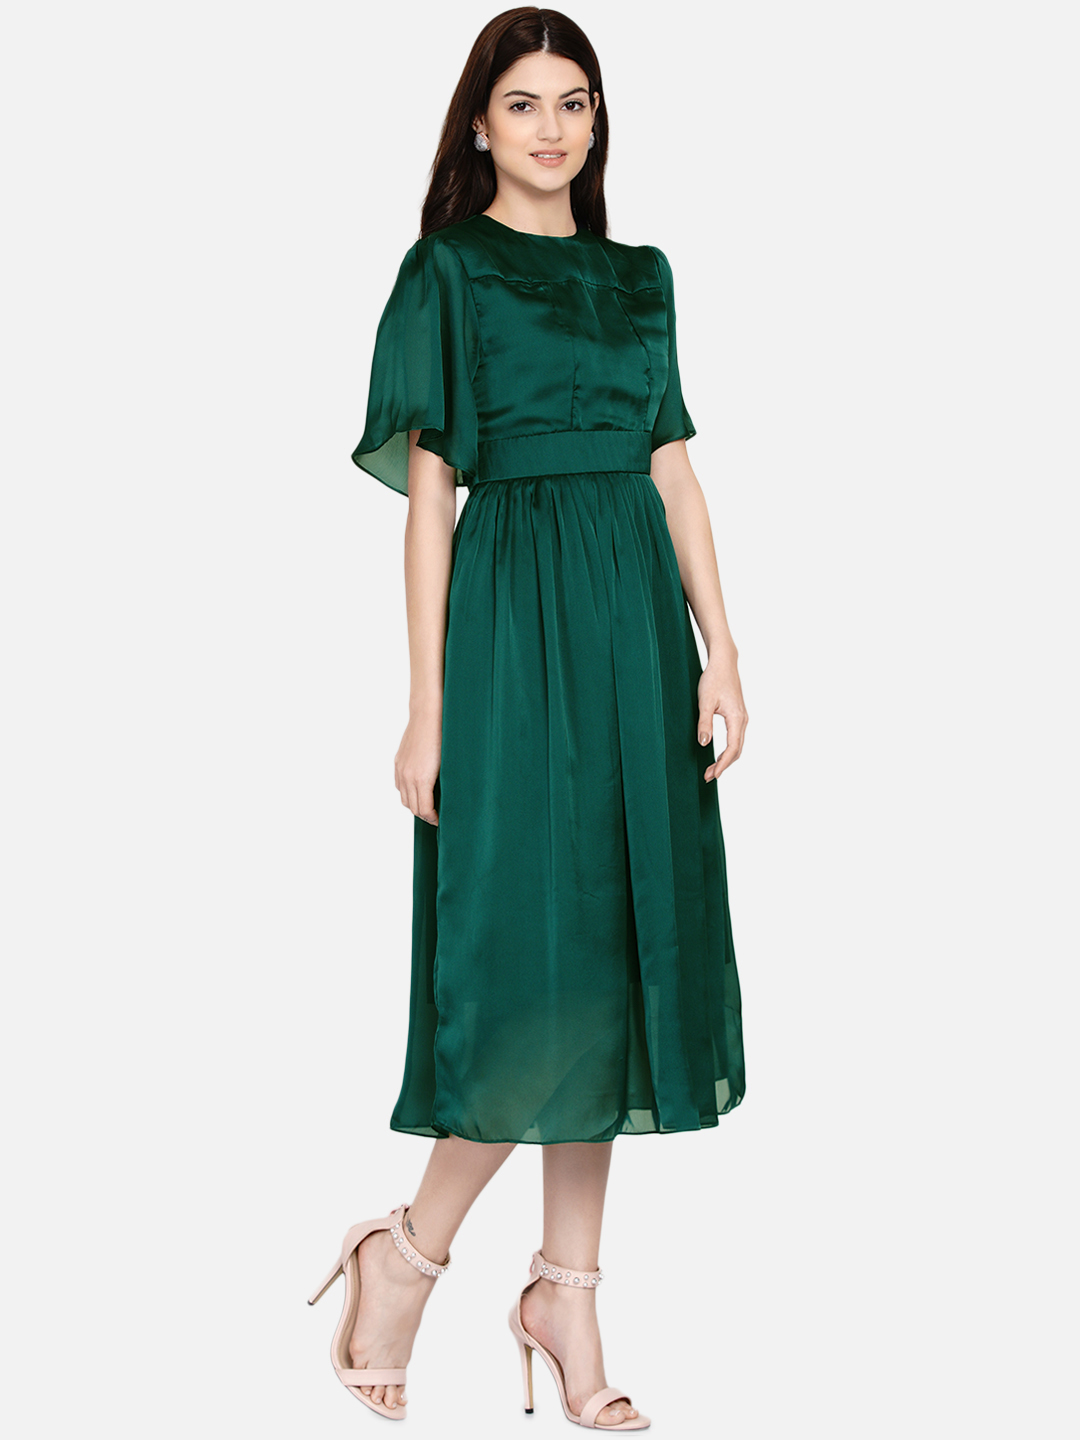 Majestic Emerald dress -1